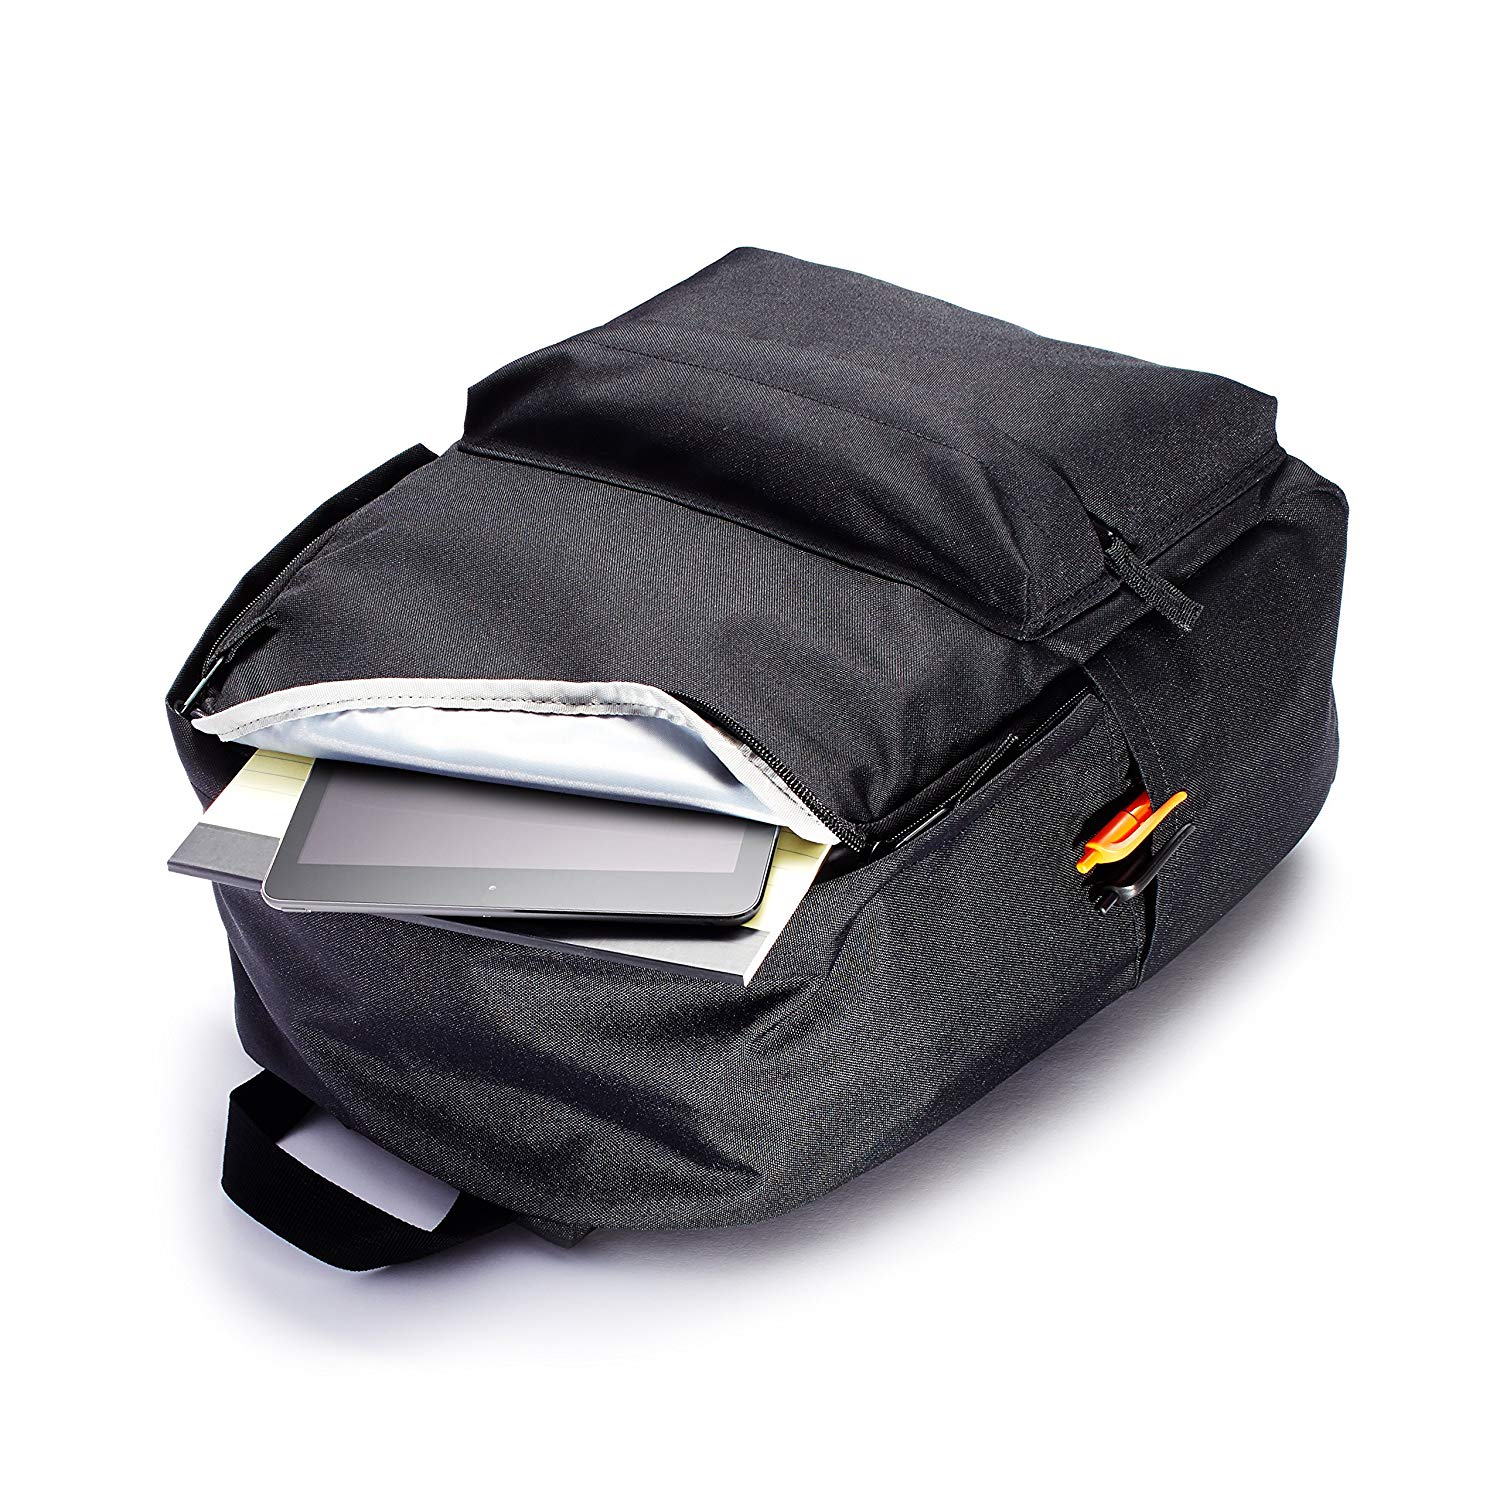 AmazonBasics Best Bagpacks for College Students